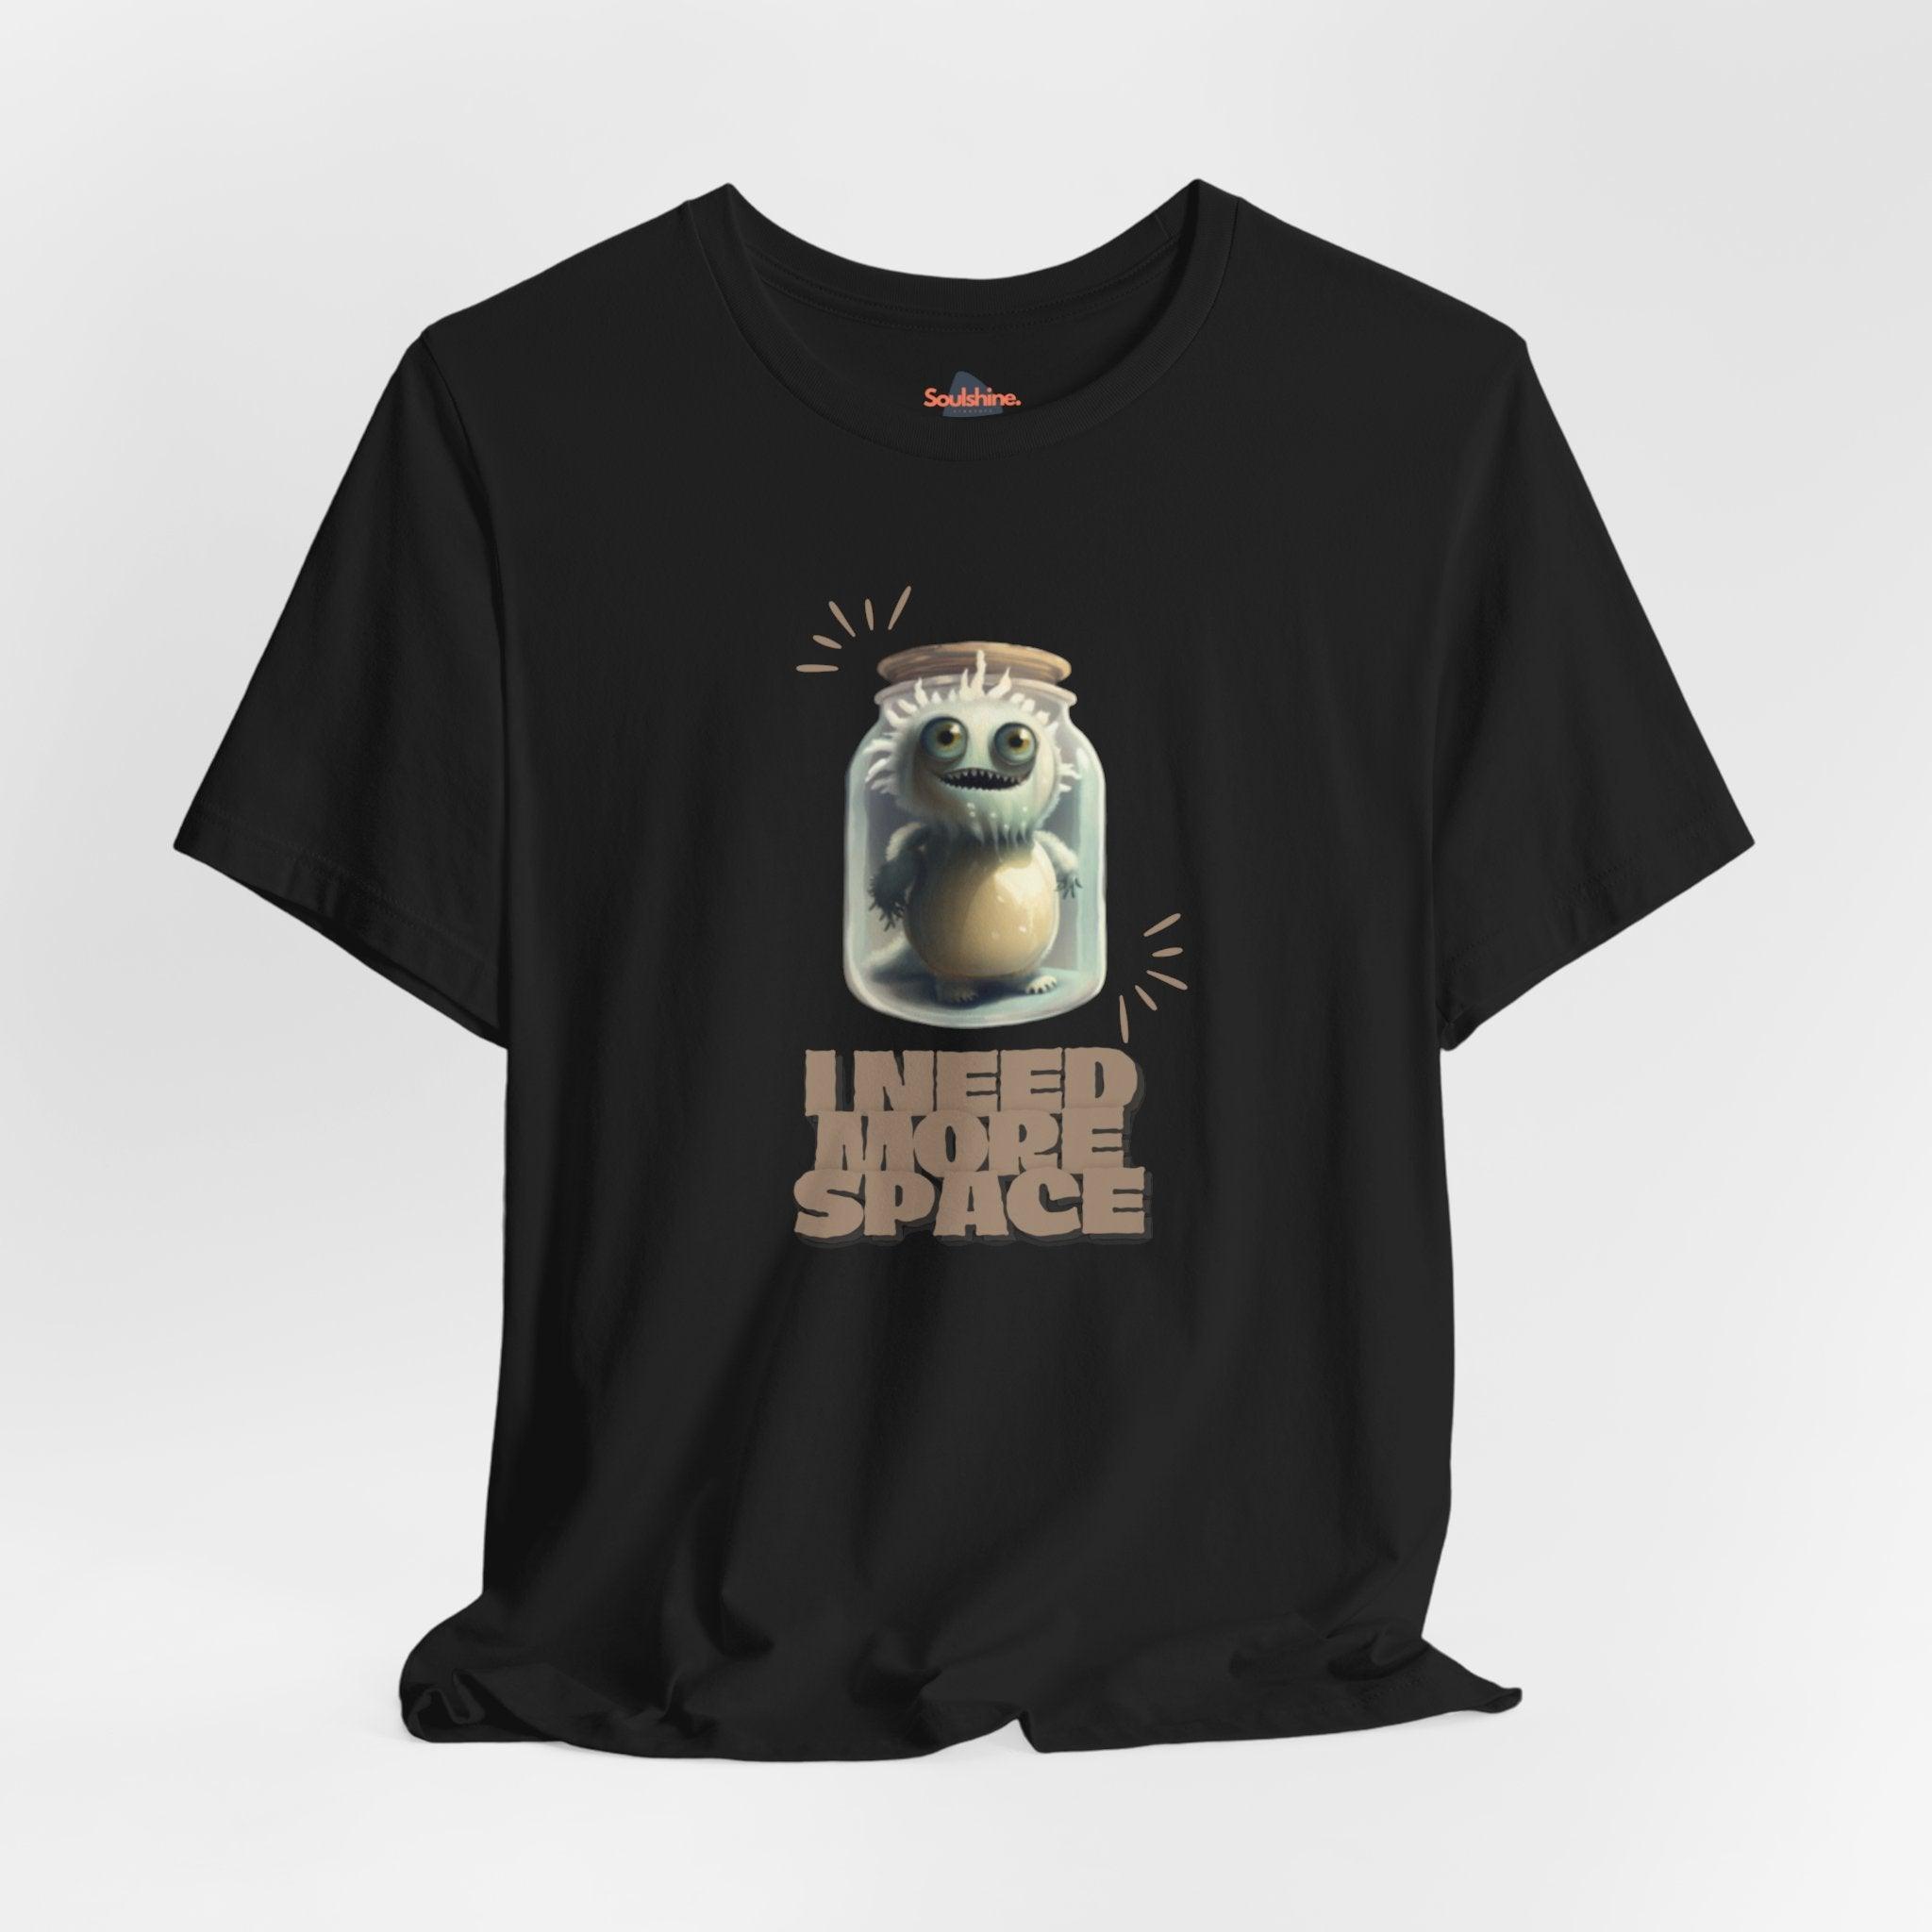 I need more space - Funny T-Shirt - Unisex Jersey Short Sleeve Tee - US Black S T-Shirt by Soulshinecreators | Soulshinecreators